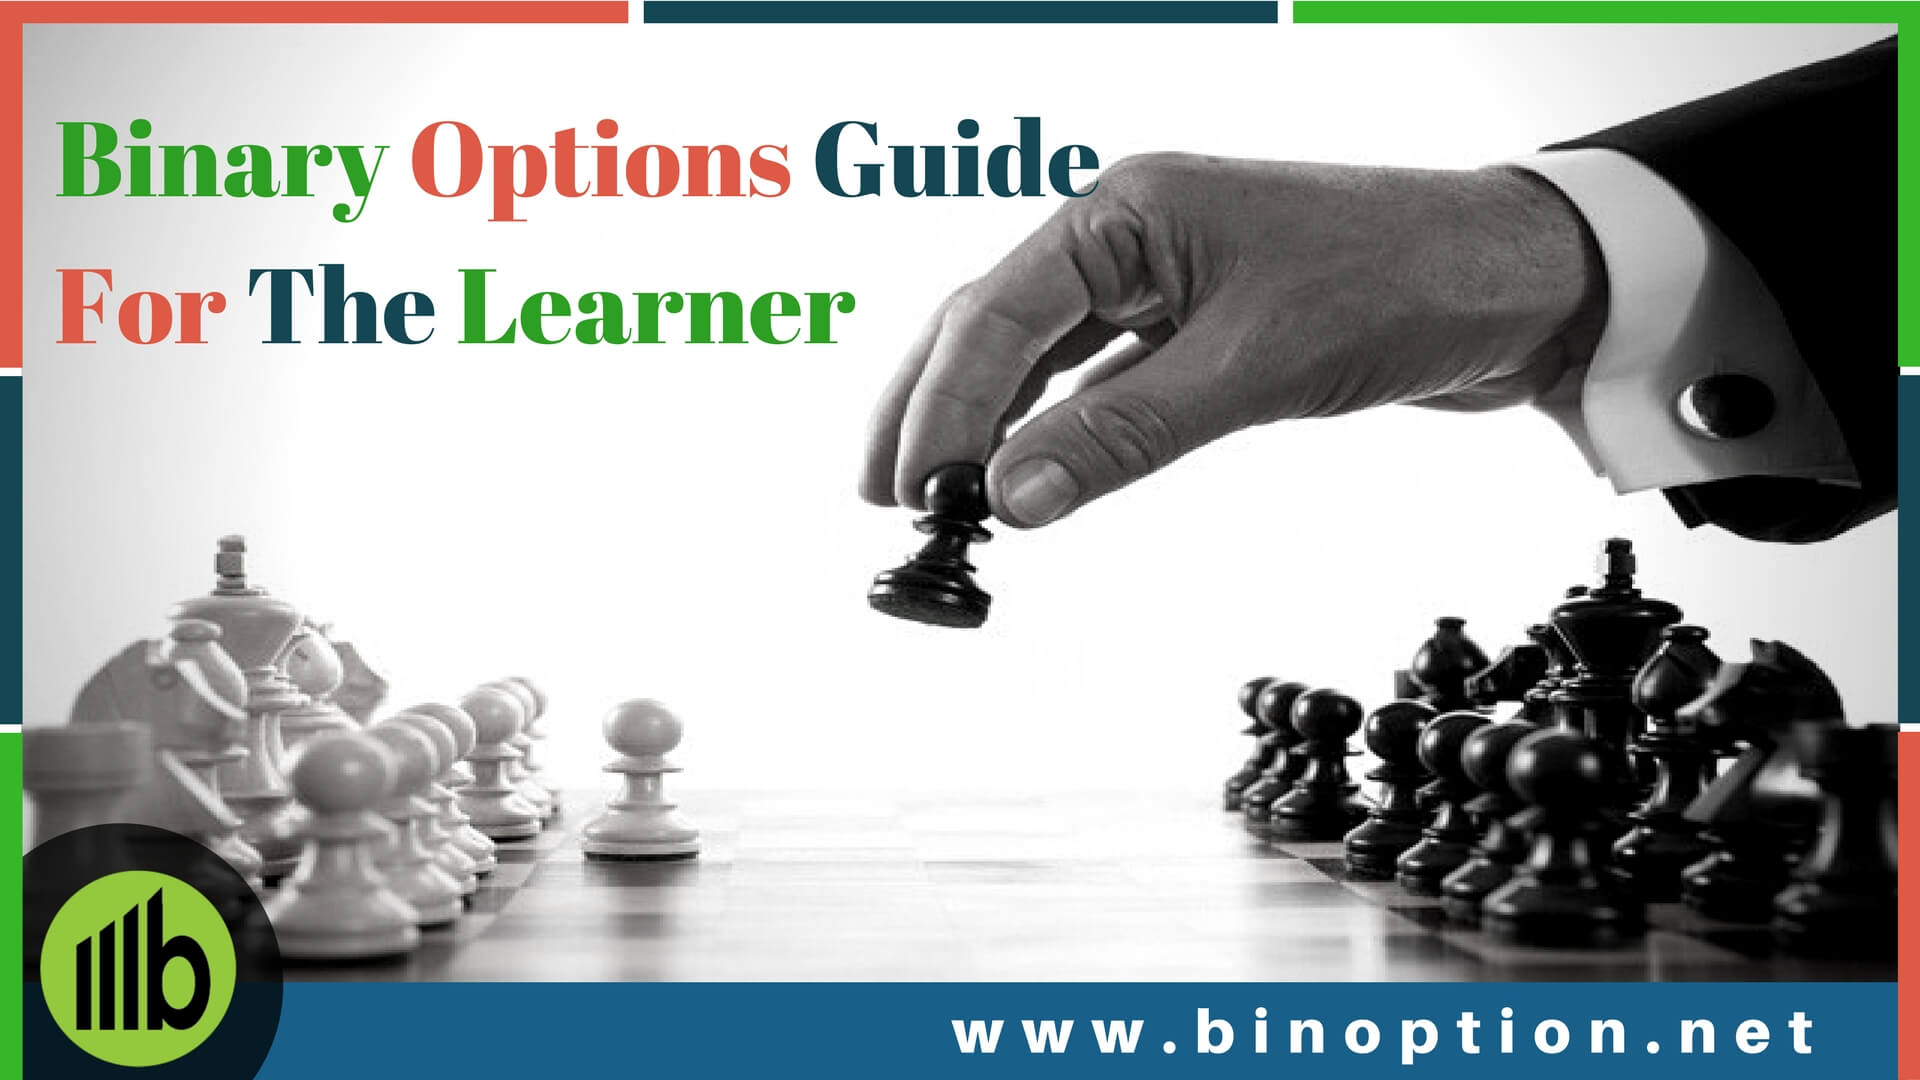 Binary Options Guide For The Learner - Binoption